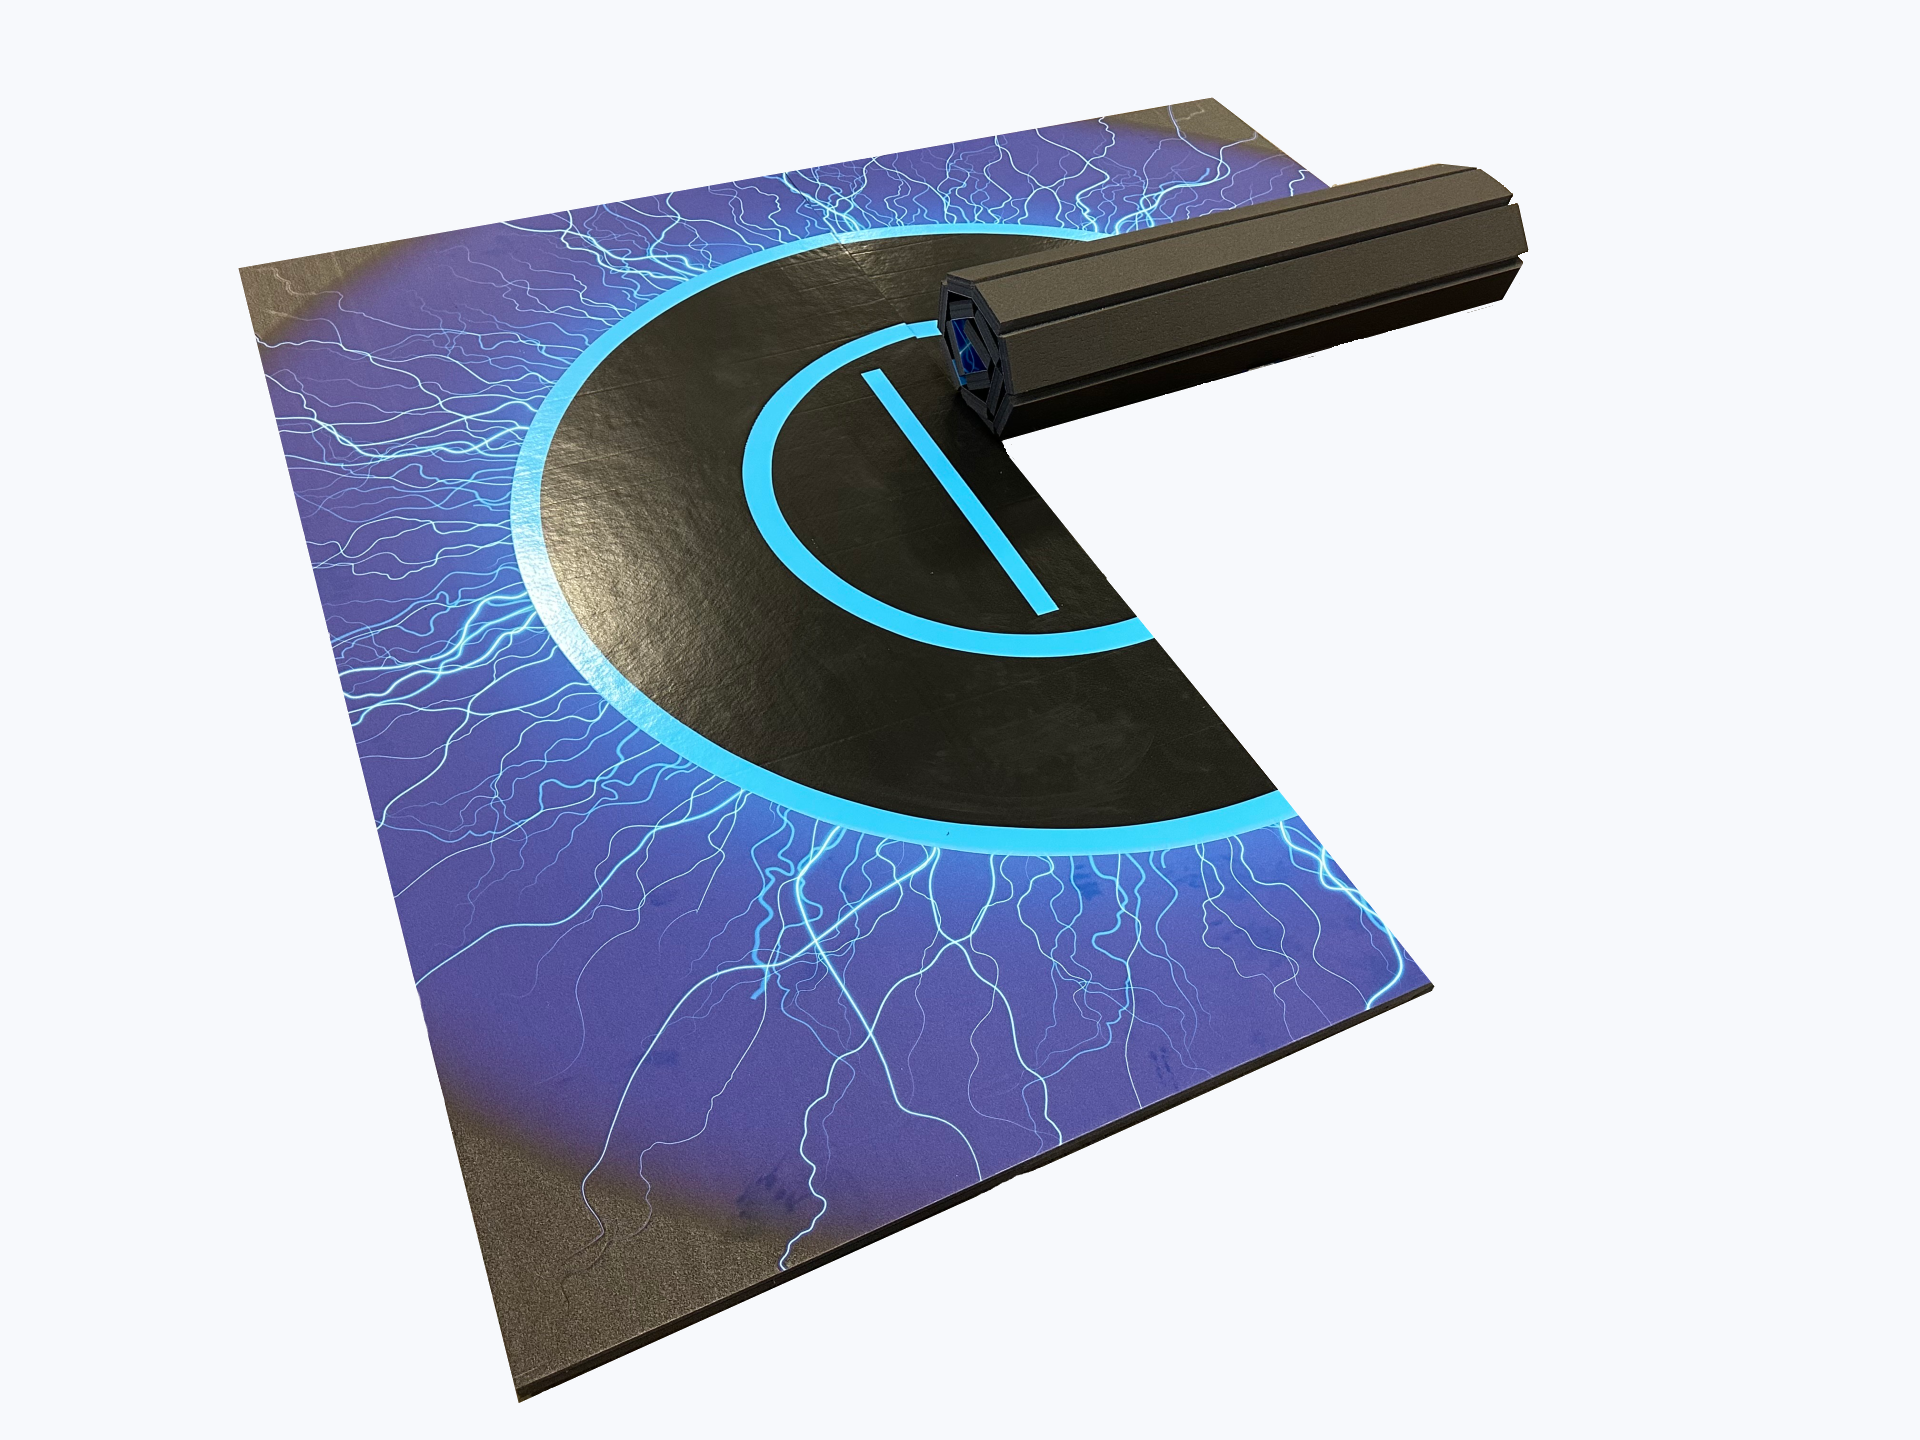 Lightning Digitally Printed 8'x8'x1.38" Roll-Up Wrestling Mat